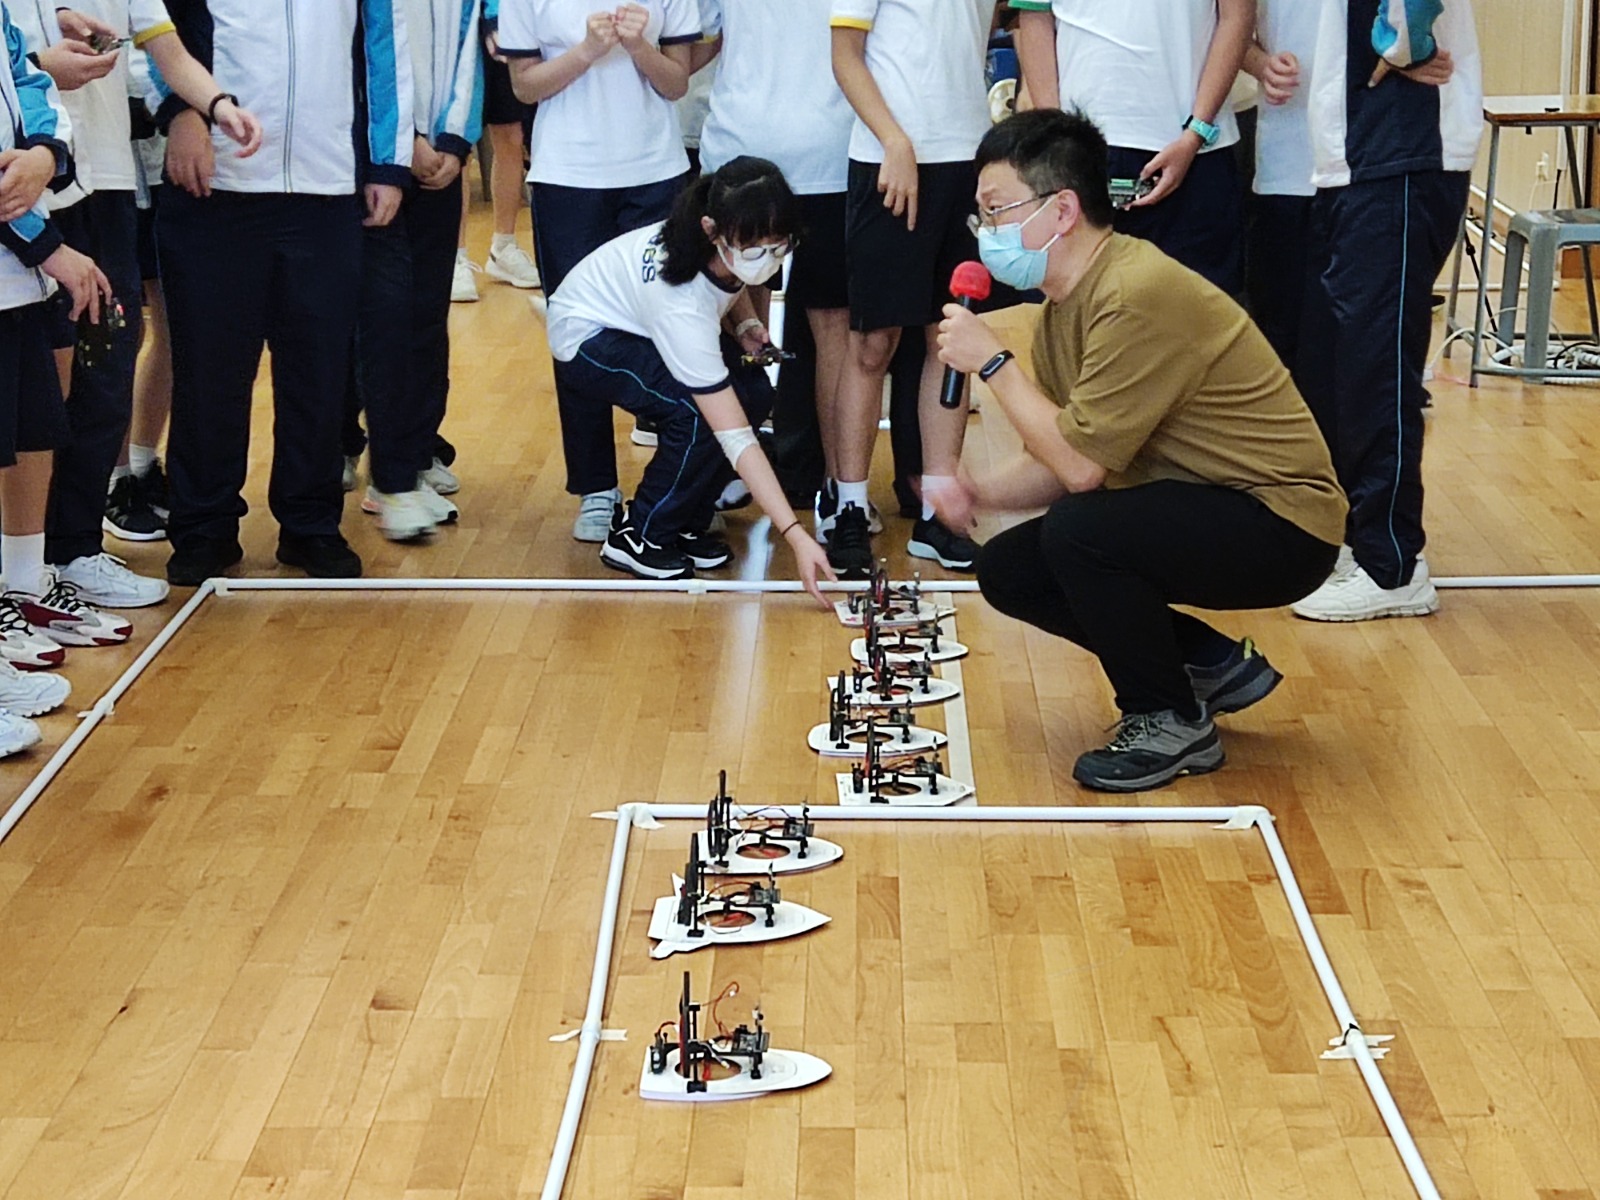 Hovercraft Fun Day - Tseung Kwan O Government Secondary School